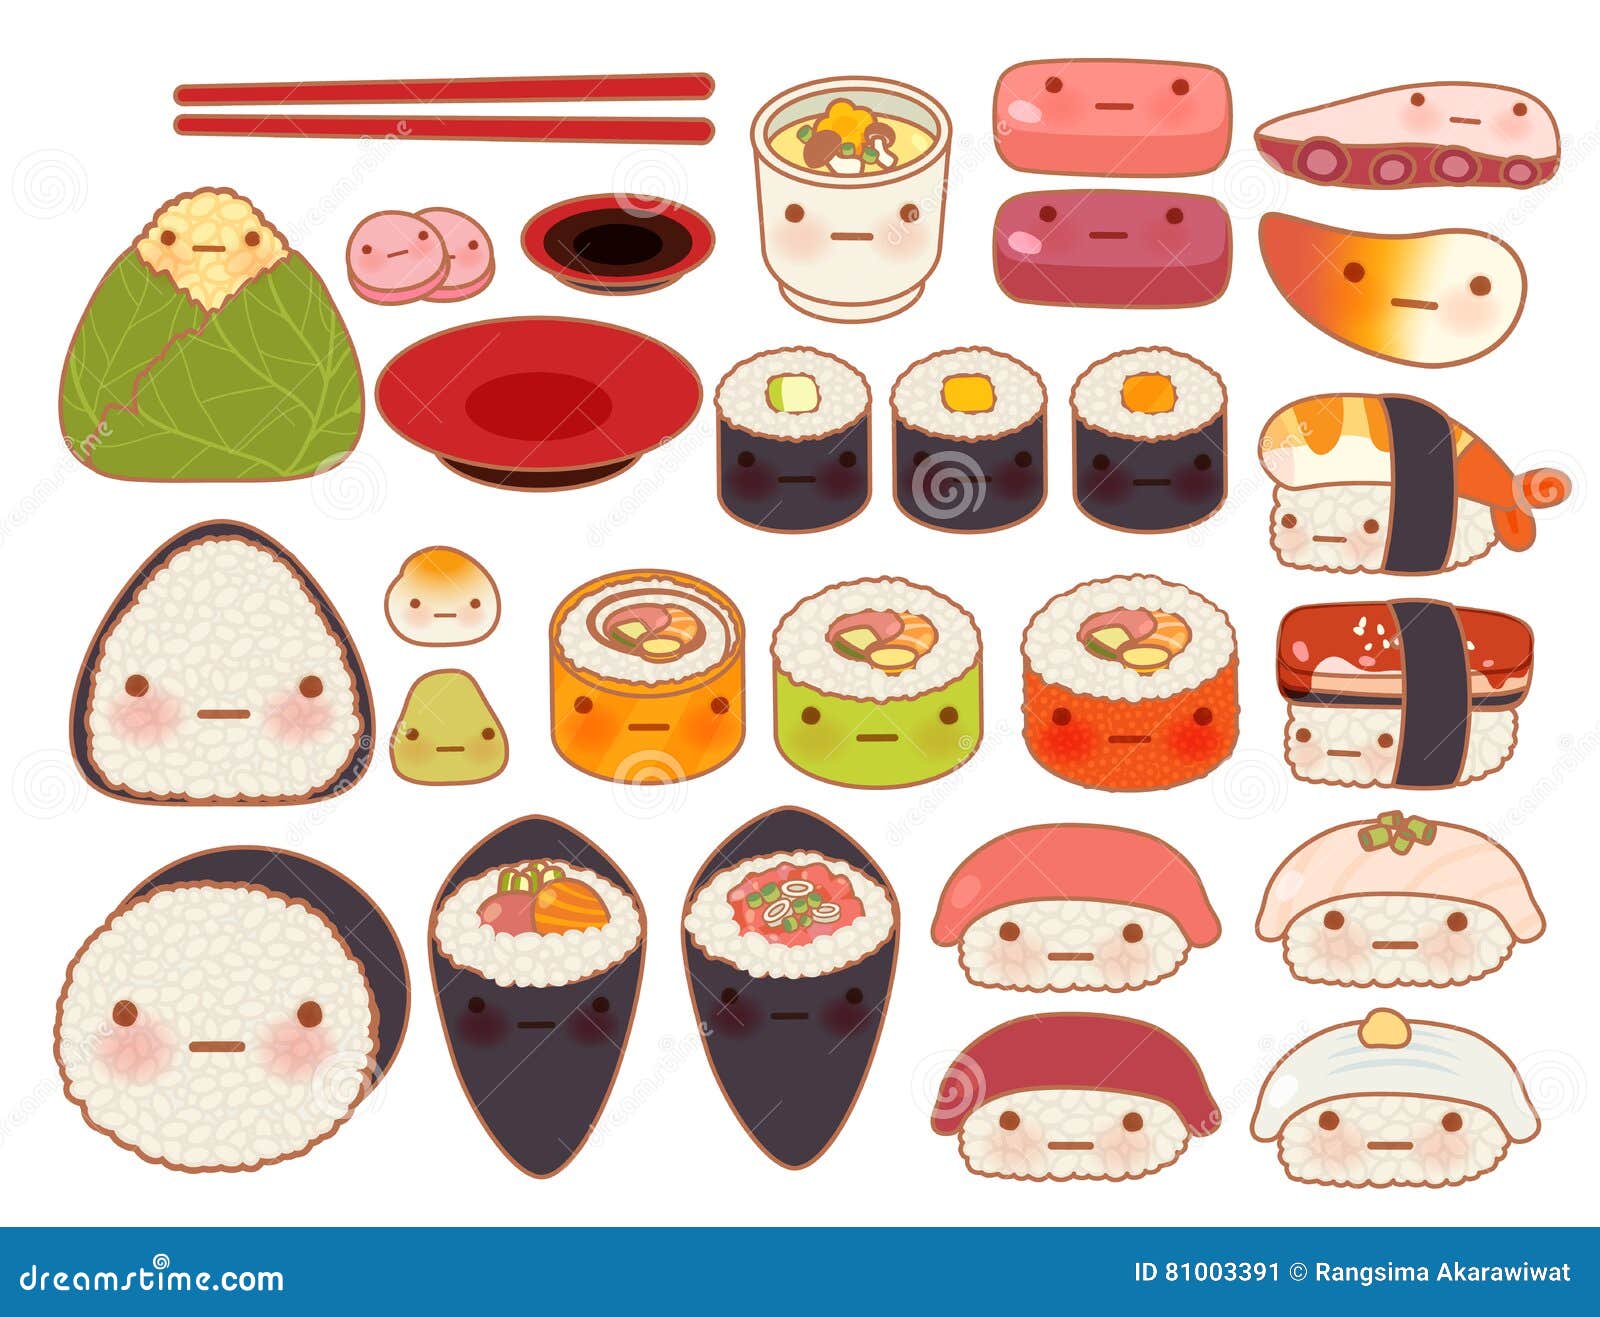 Japanese Food Doodle Stock Illustrations 4 749 Japanese Food Doodle Stock Illustrations Vectors Clipart Dreamstime